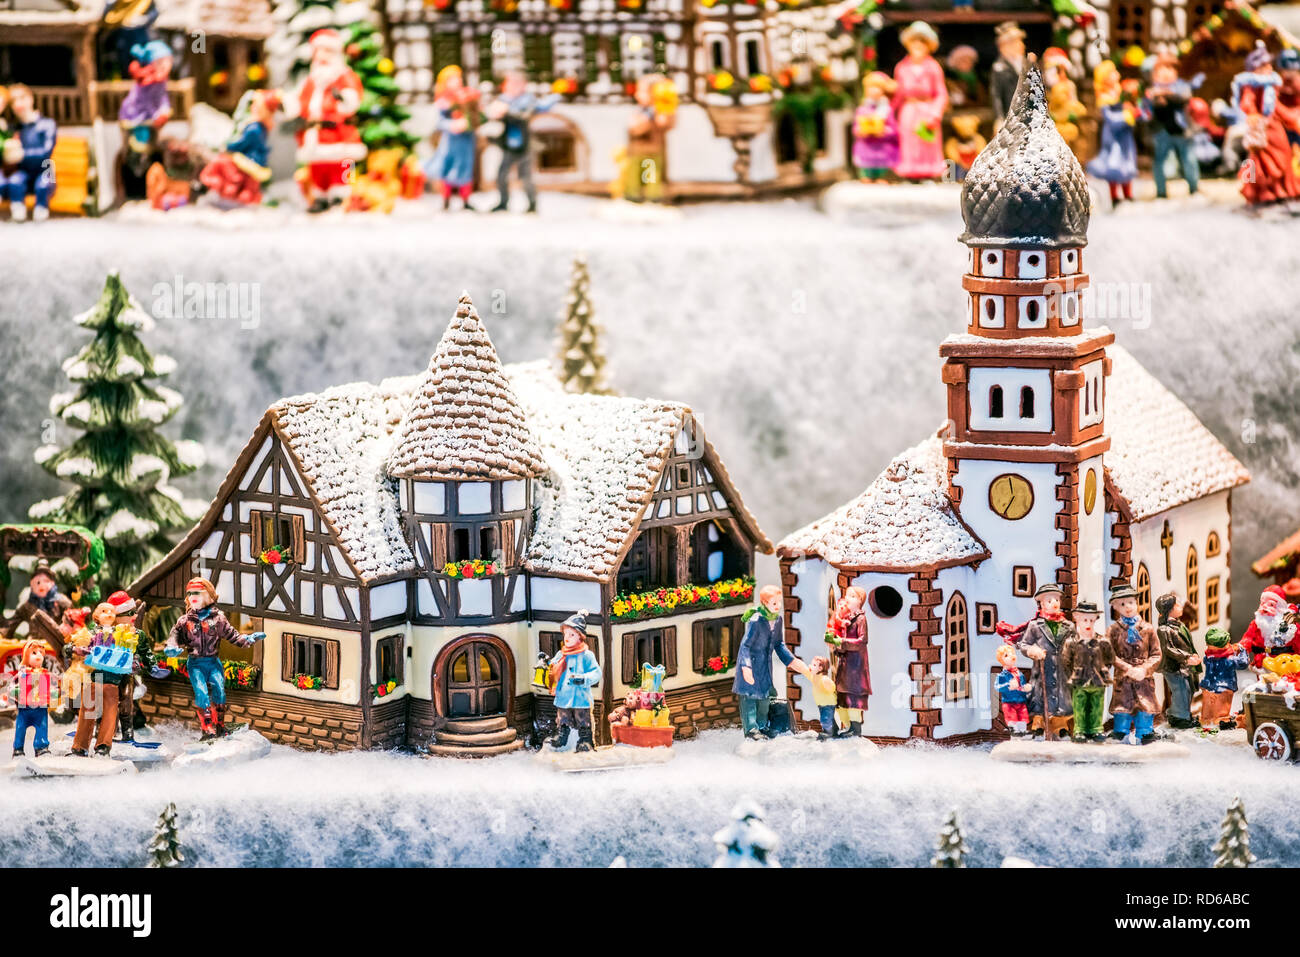 Salzburg, Salzburger Christkindlmarkt gingerbread houses Christmas Market decorations in Austria. Stock Photo